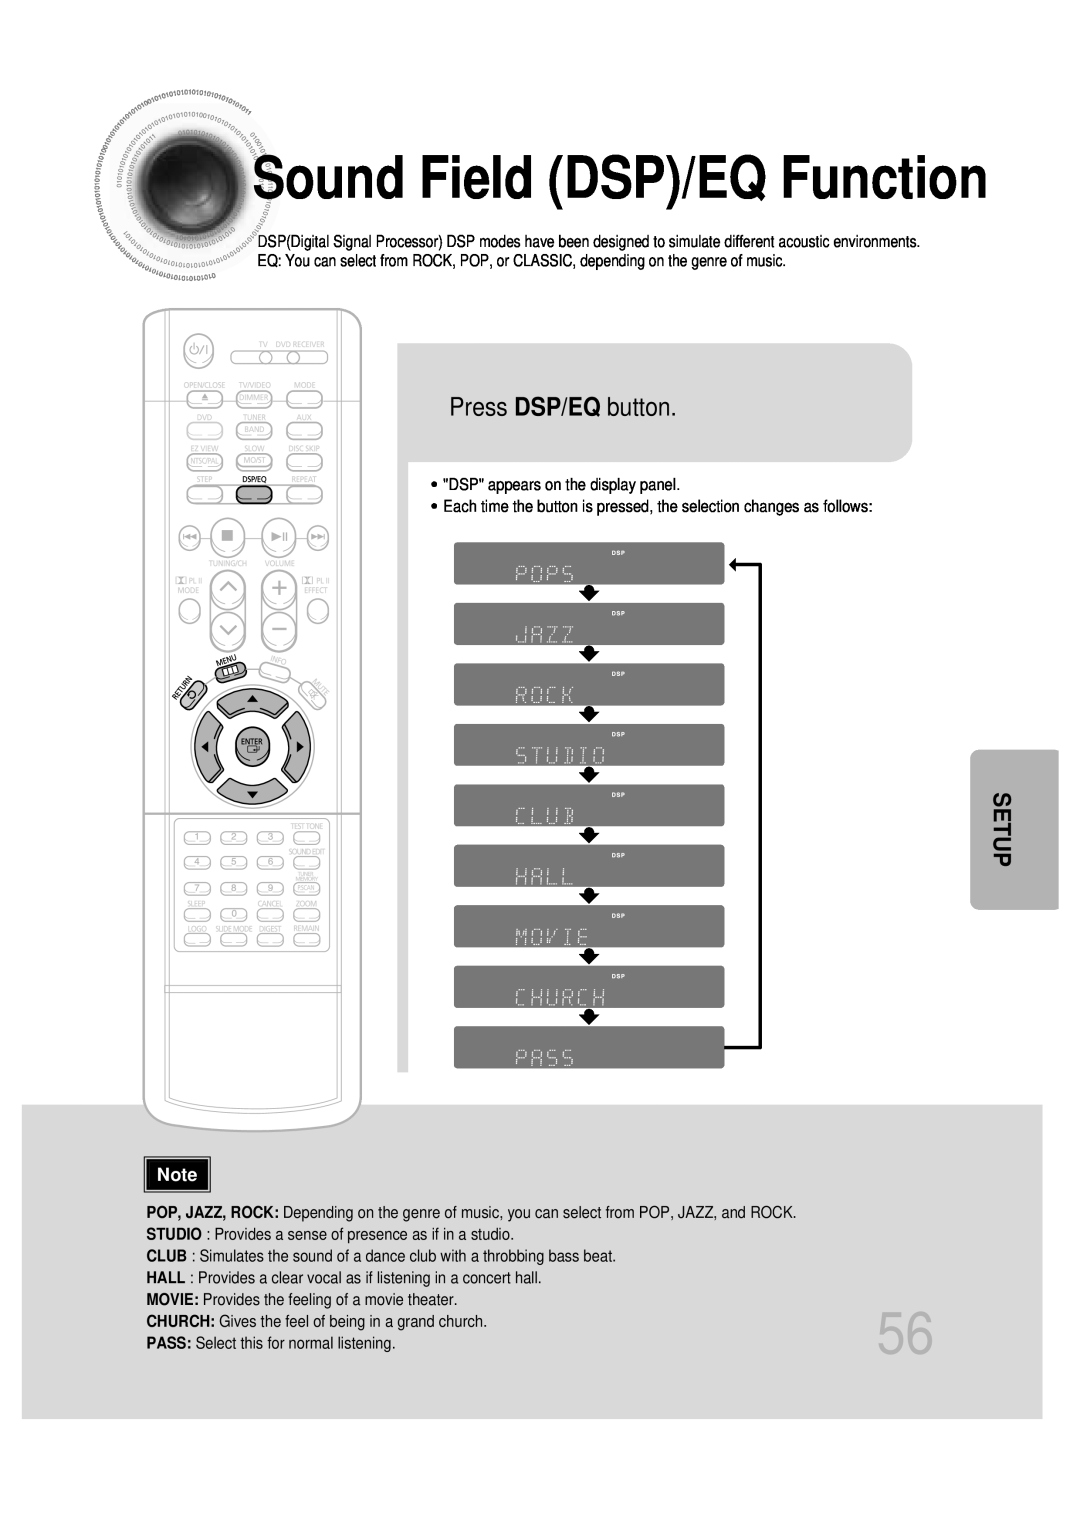 Samsung HT-DB600 instruction manual Press DSP/EQ button, Sound Field DSP/EQ Function, Setup 